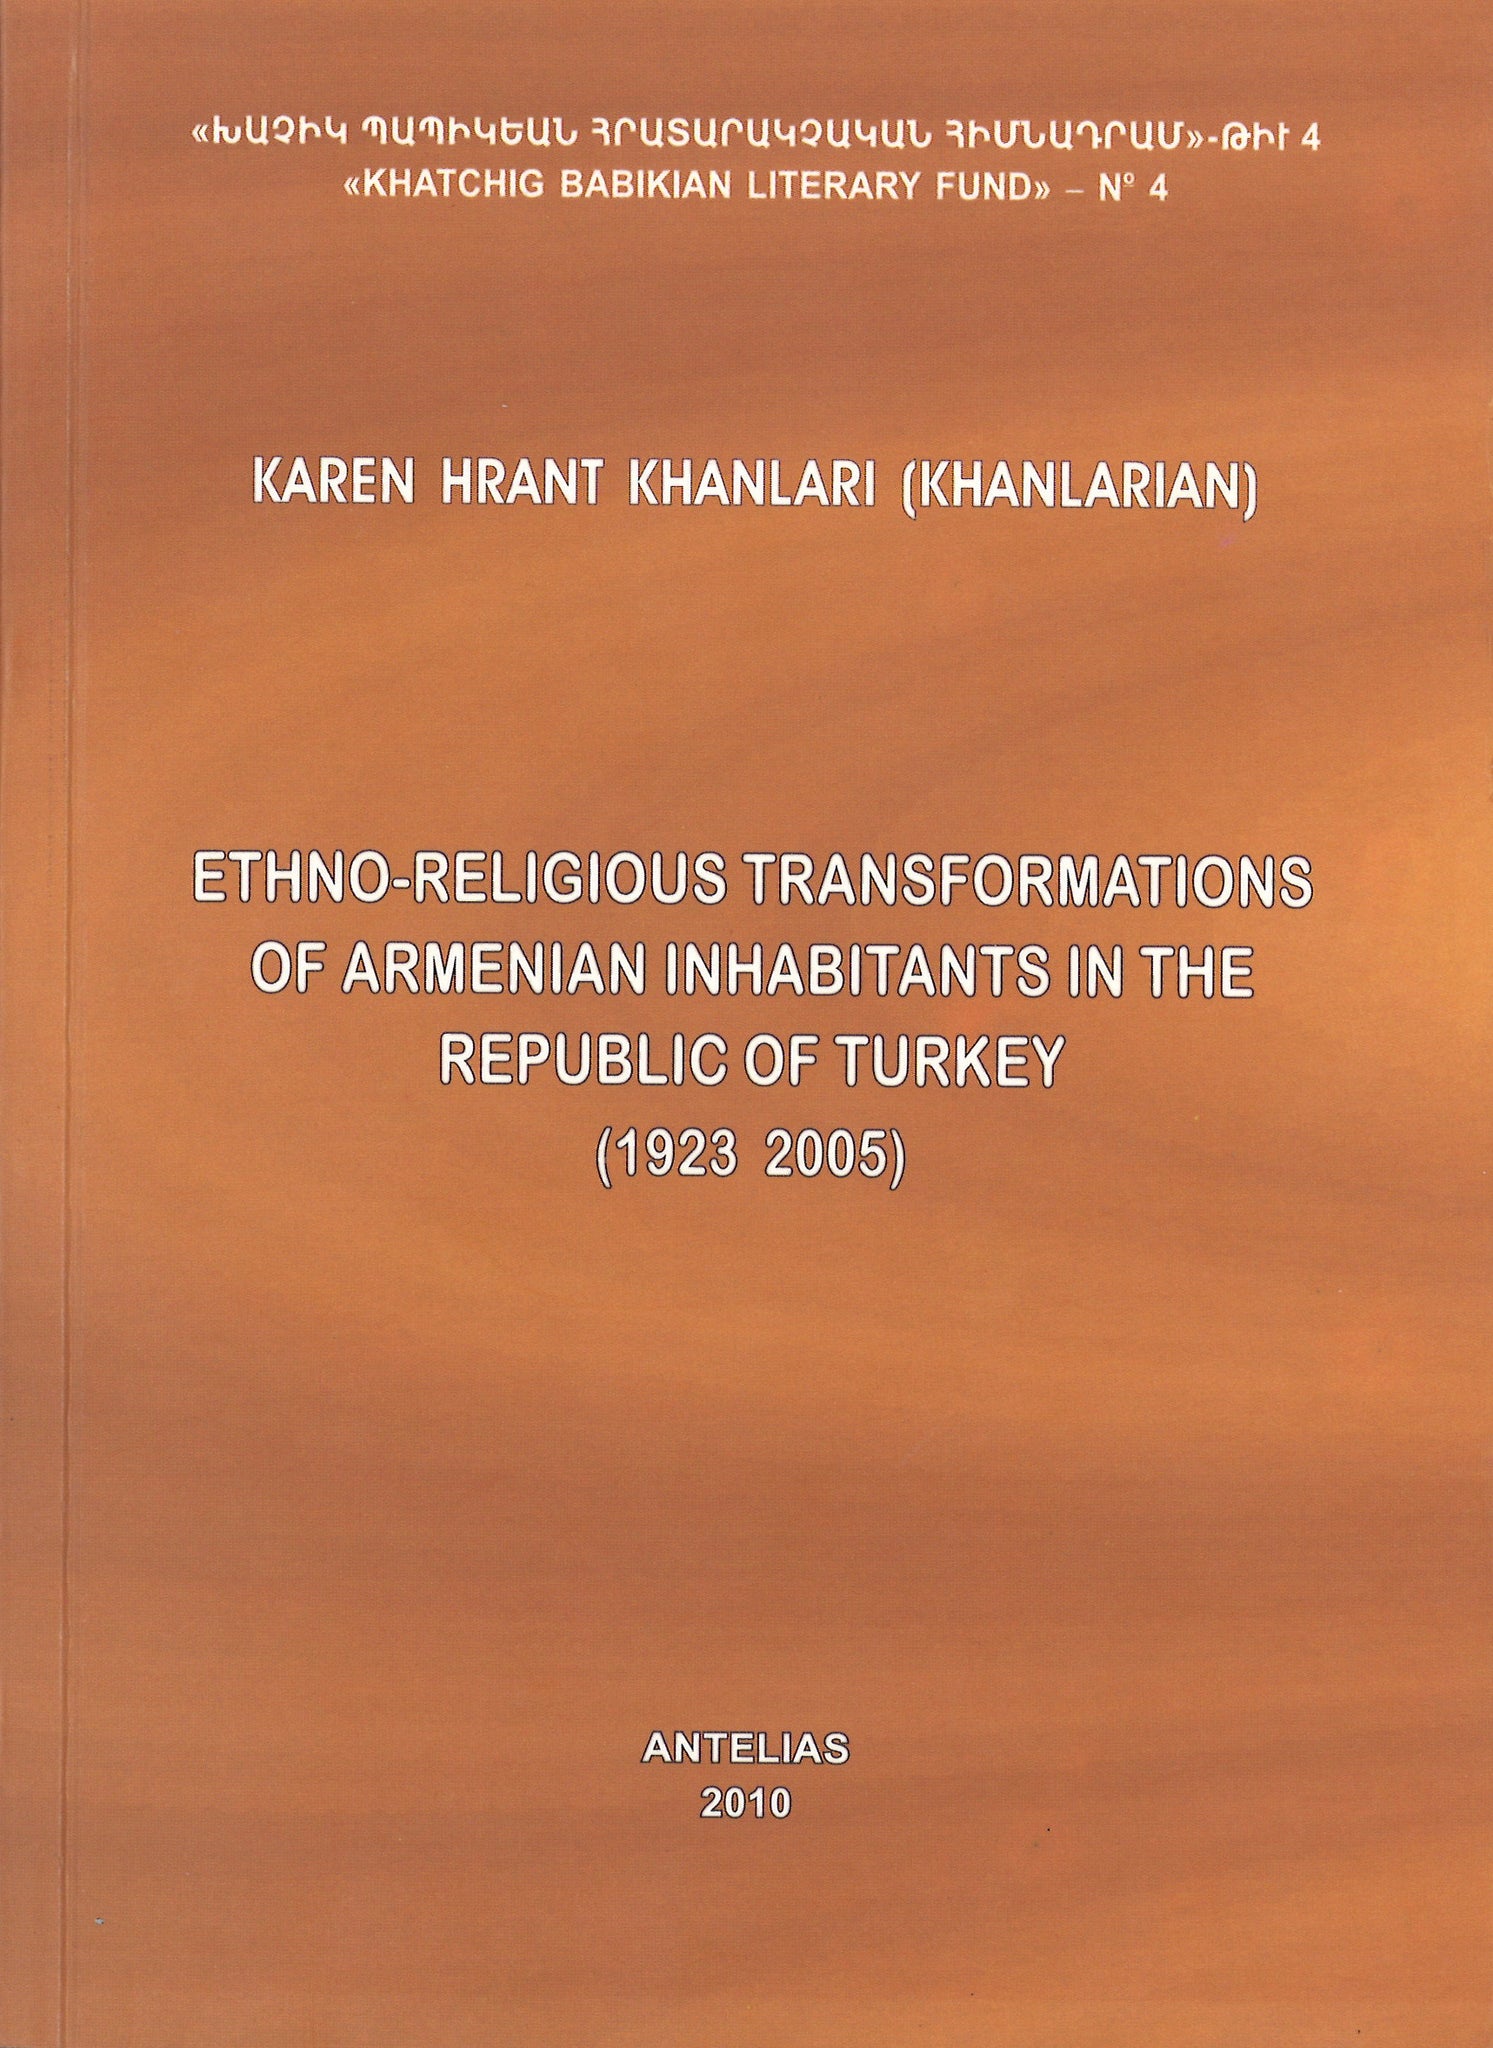 ETHNO-RELIGIOUS TRANSFORMATION OF ARMENIAN INHABITANTS IN THE REPUBLIC OF TURKEY (1923-2005)